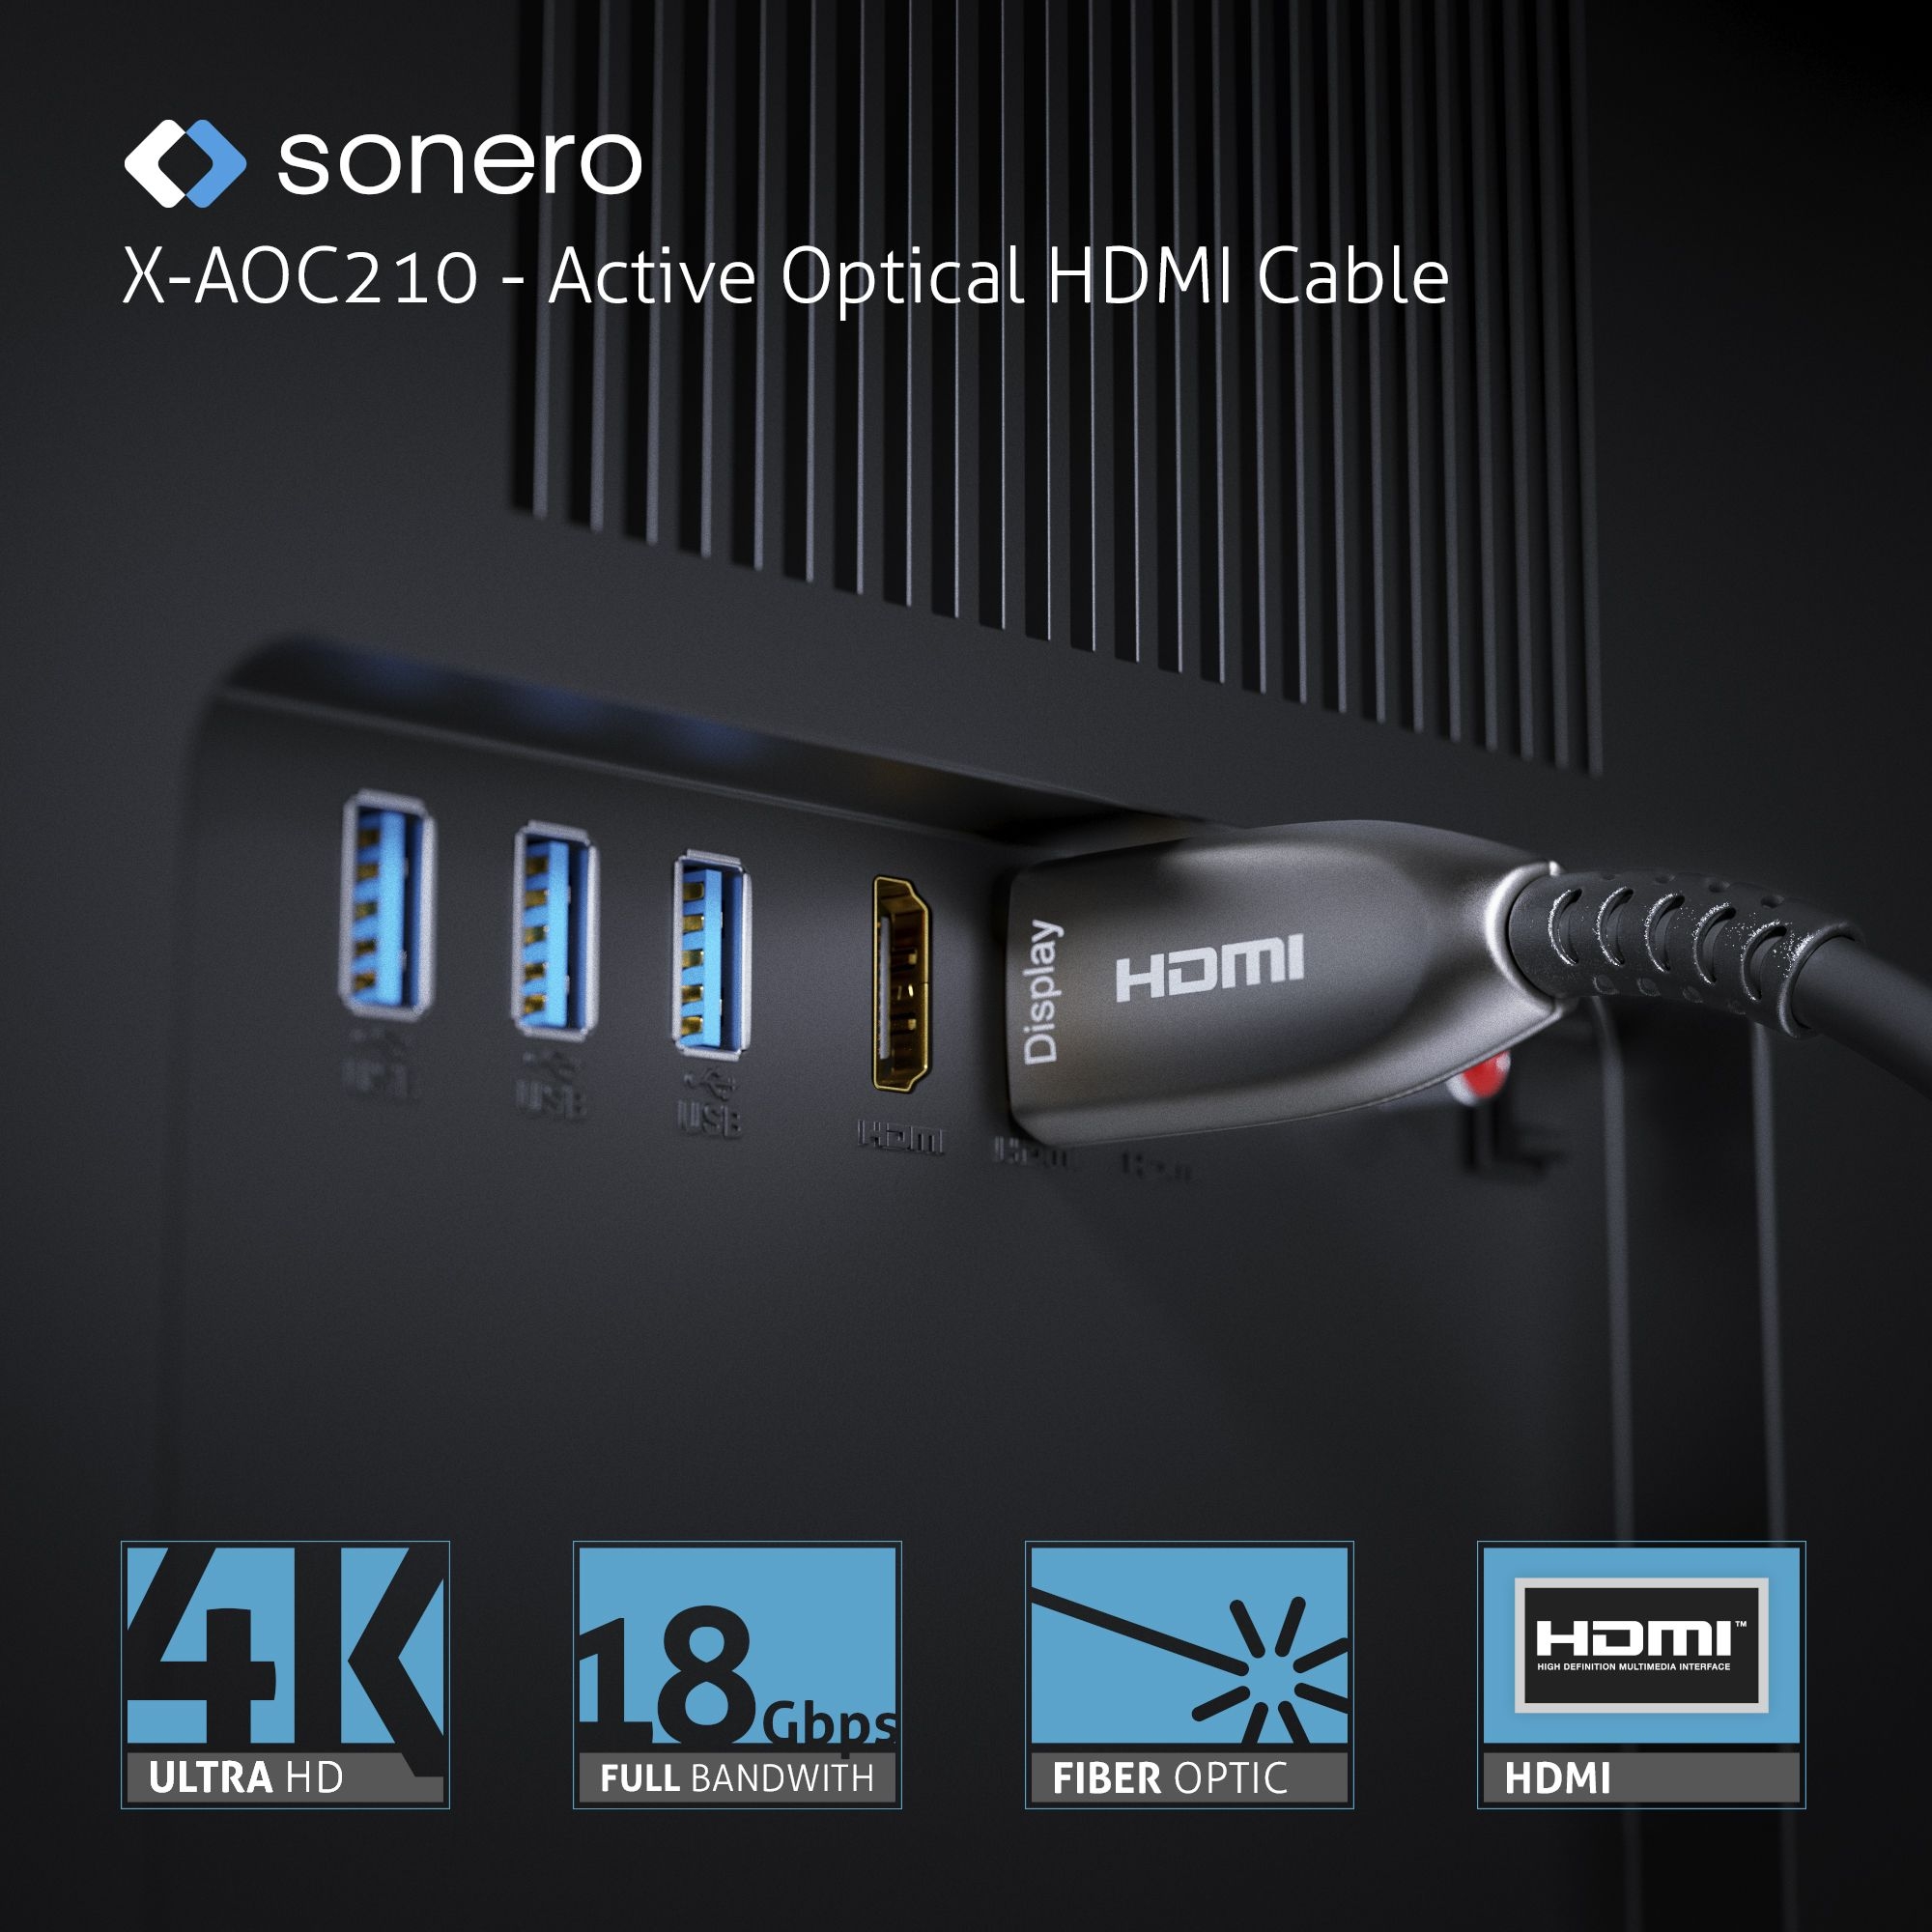 Sonero X-AOC210-200 - HDMI 4K fibre optic cable - 18 Gbps - 20.0m - Black